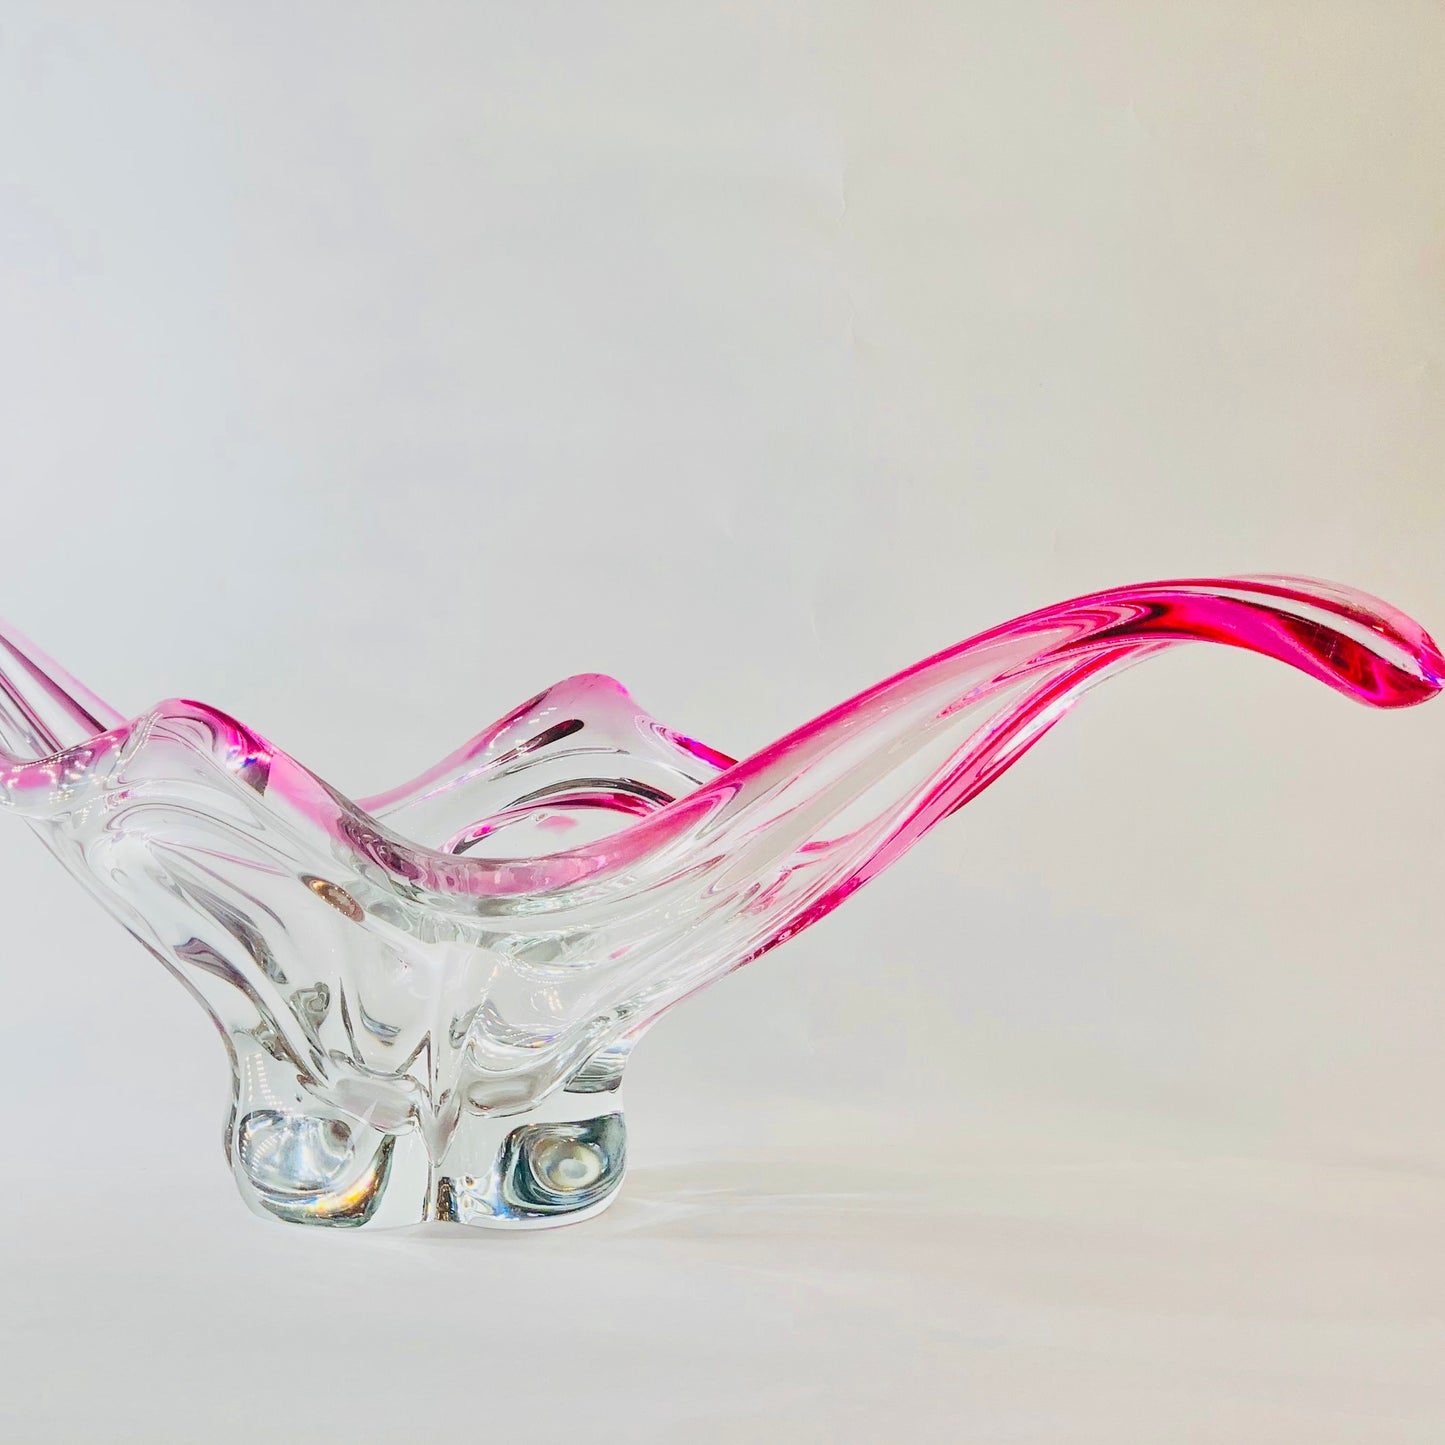 Rare Midcentury Murano glass centrepiece with pink rim